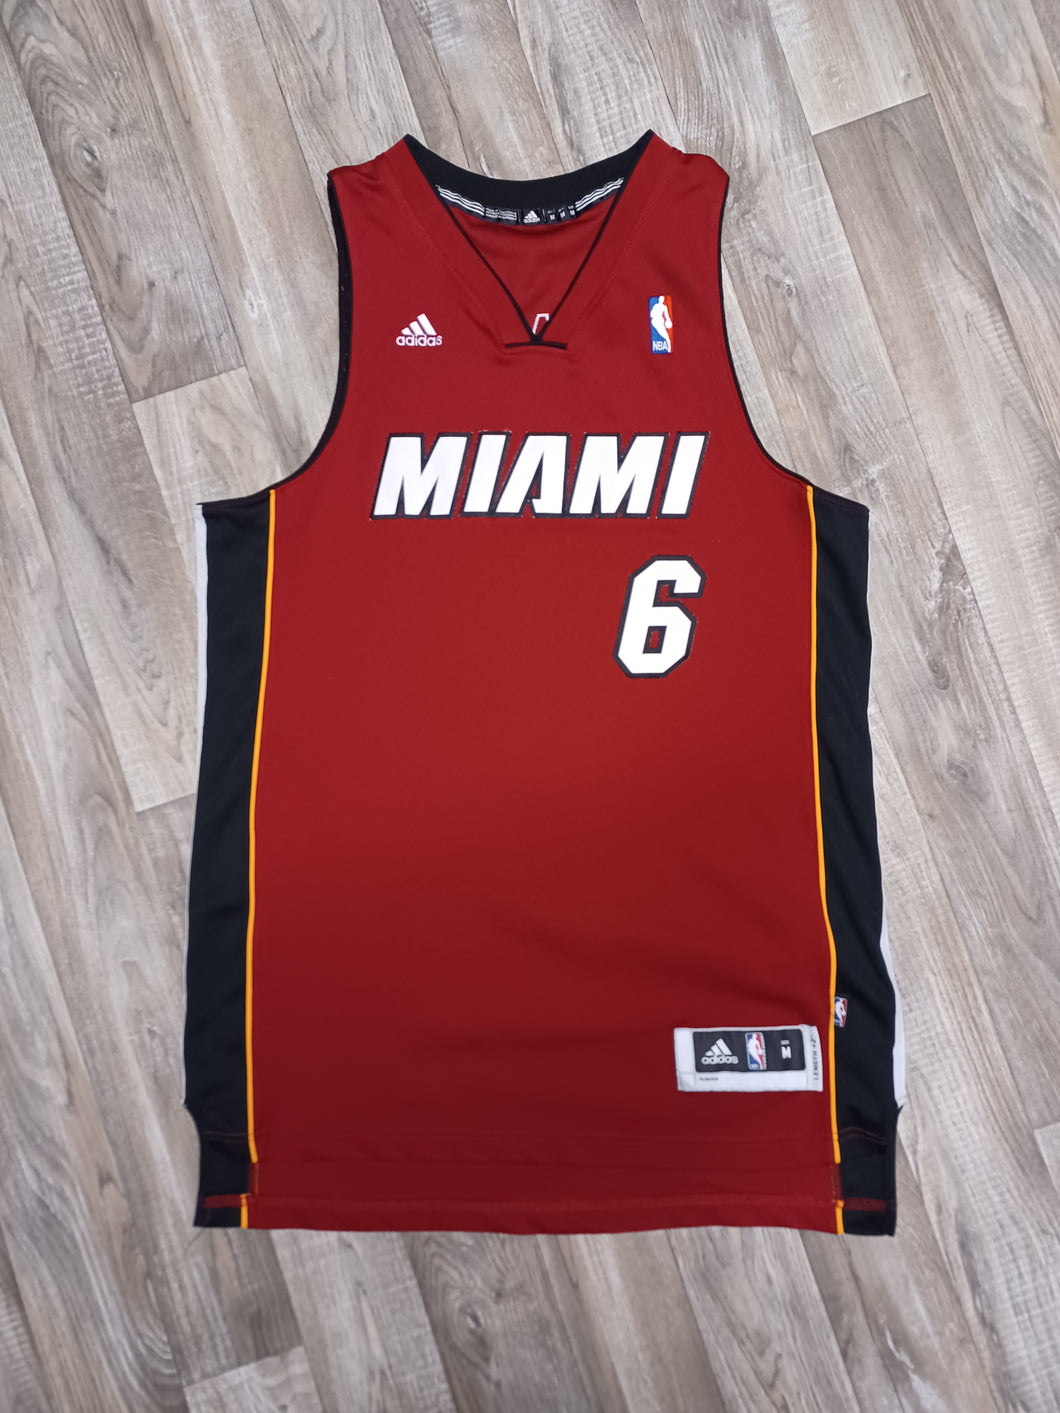 2010 LeBron James Miami Heat Adidas NBA Swingman Jersey Size Medium – Rare  VNTG